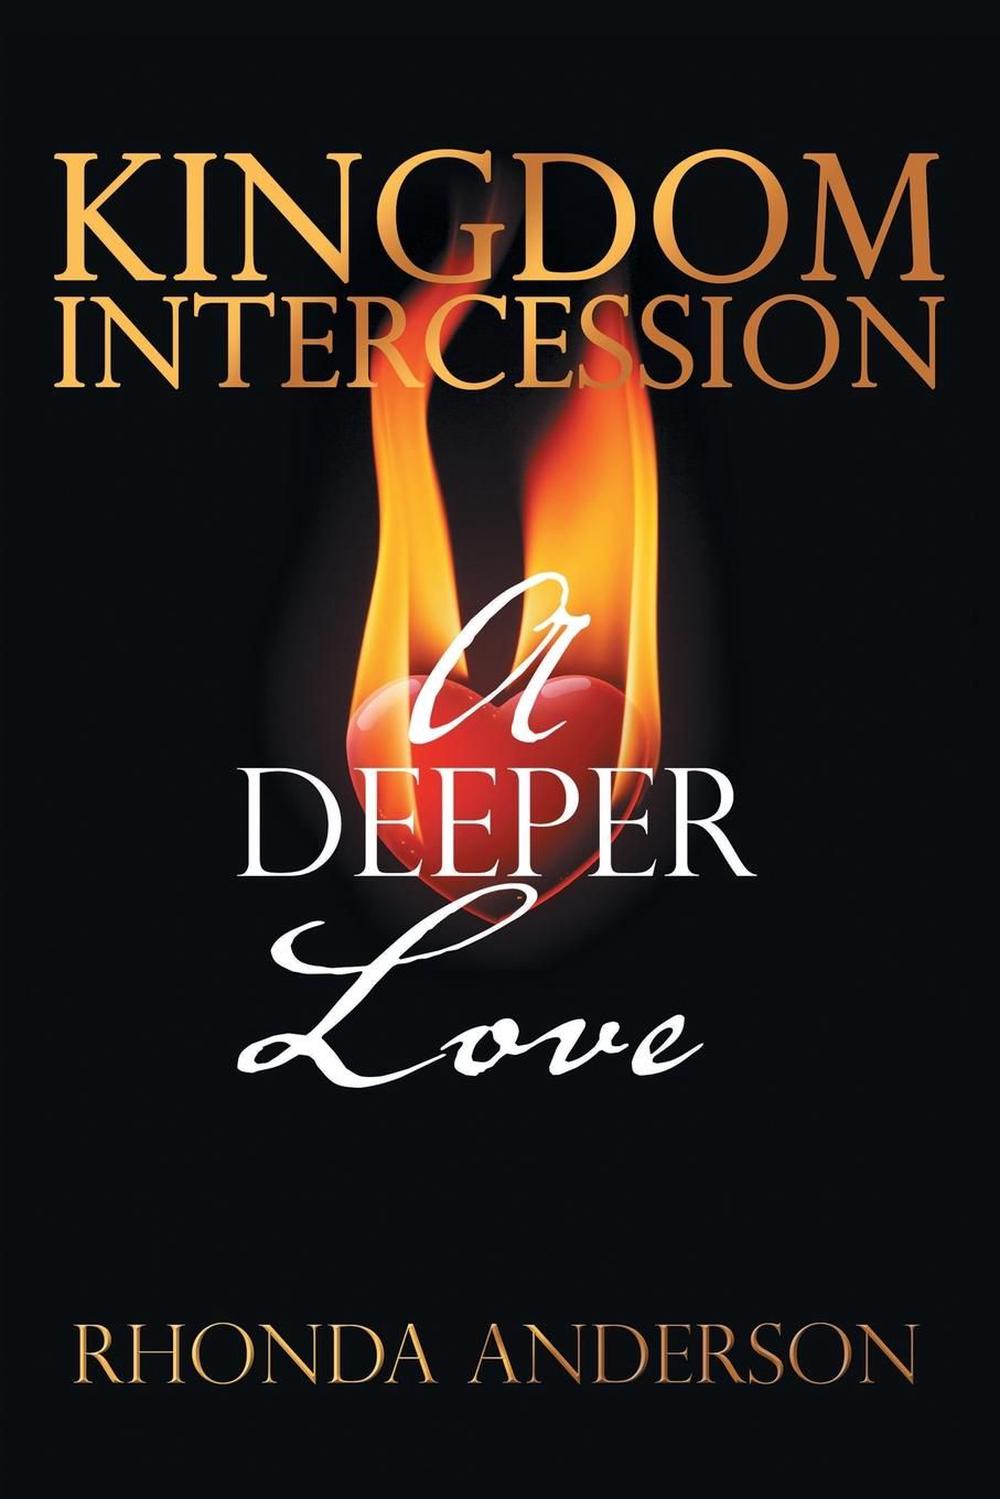 Kingdom Intercession: A Powerful Gift from God by Rhonda Anderson